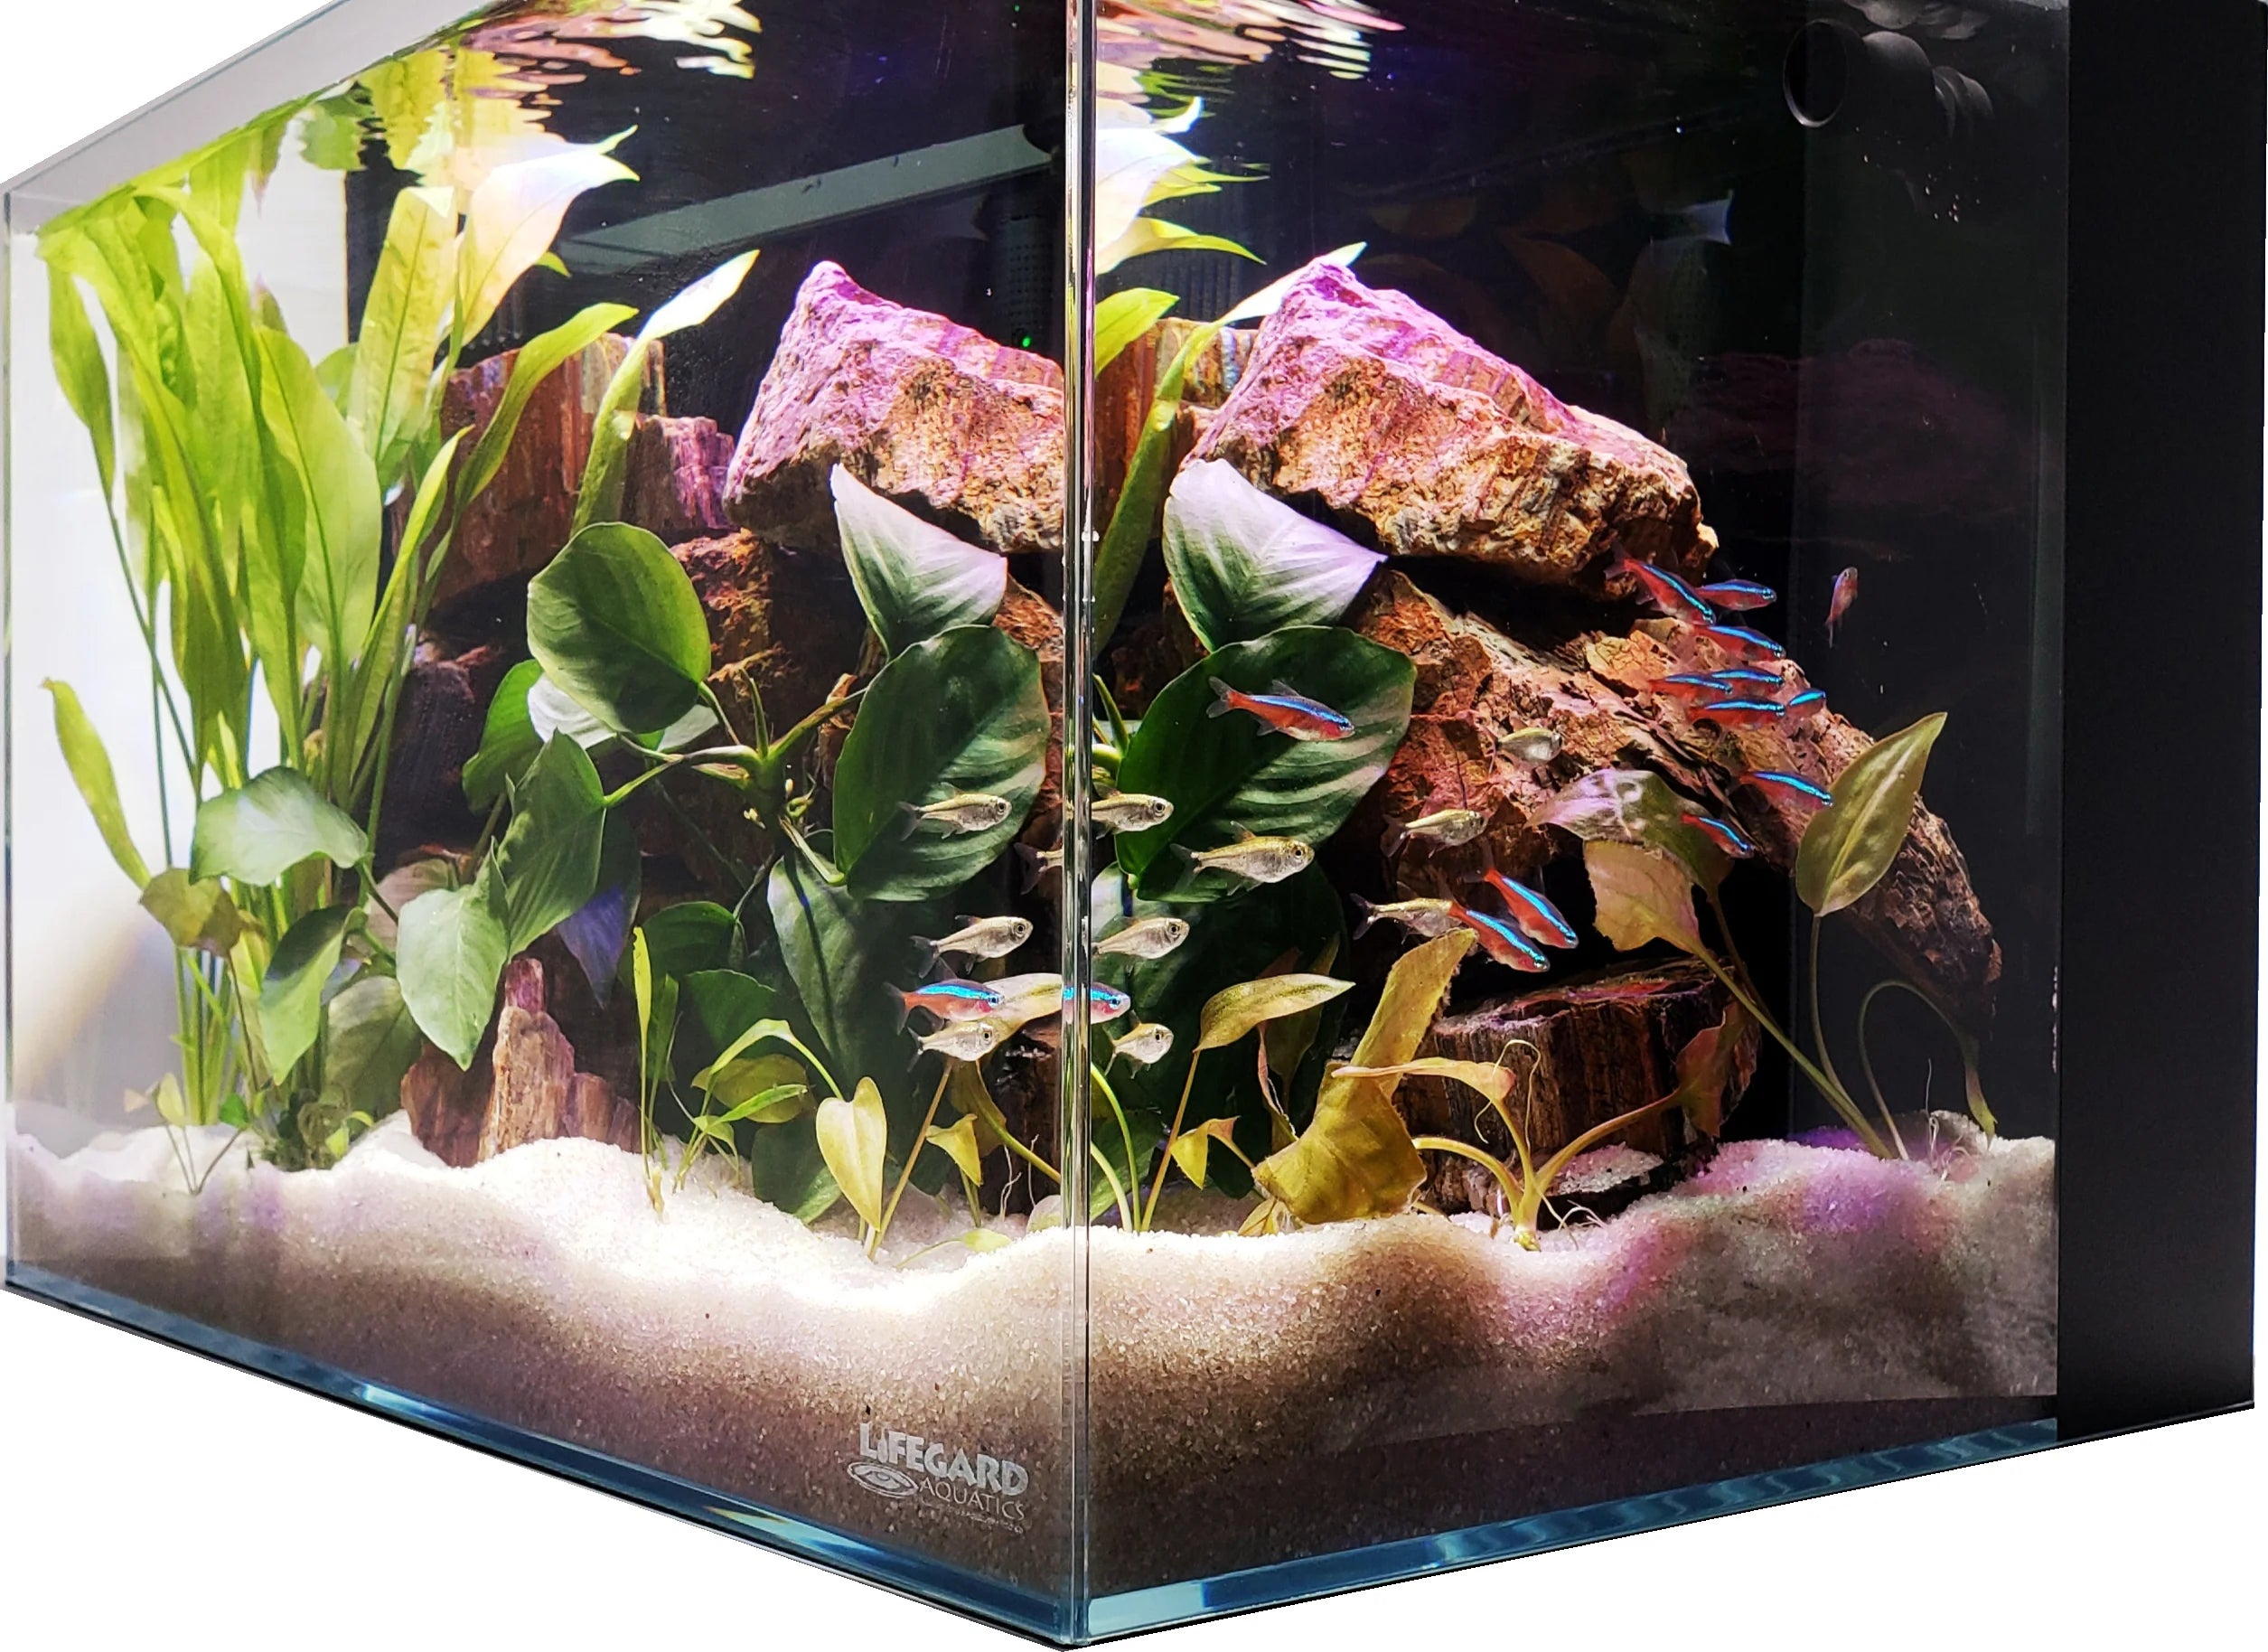 Lifegard Aquatics 45 Degree Low Iron Ultra Clear Aquarium with Built in Back Filter (24 gallons, 23.62" x 15.75" x 14.96")